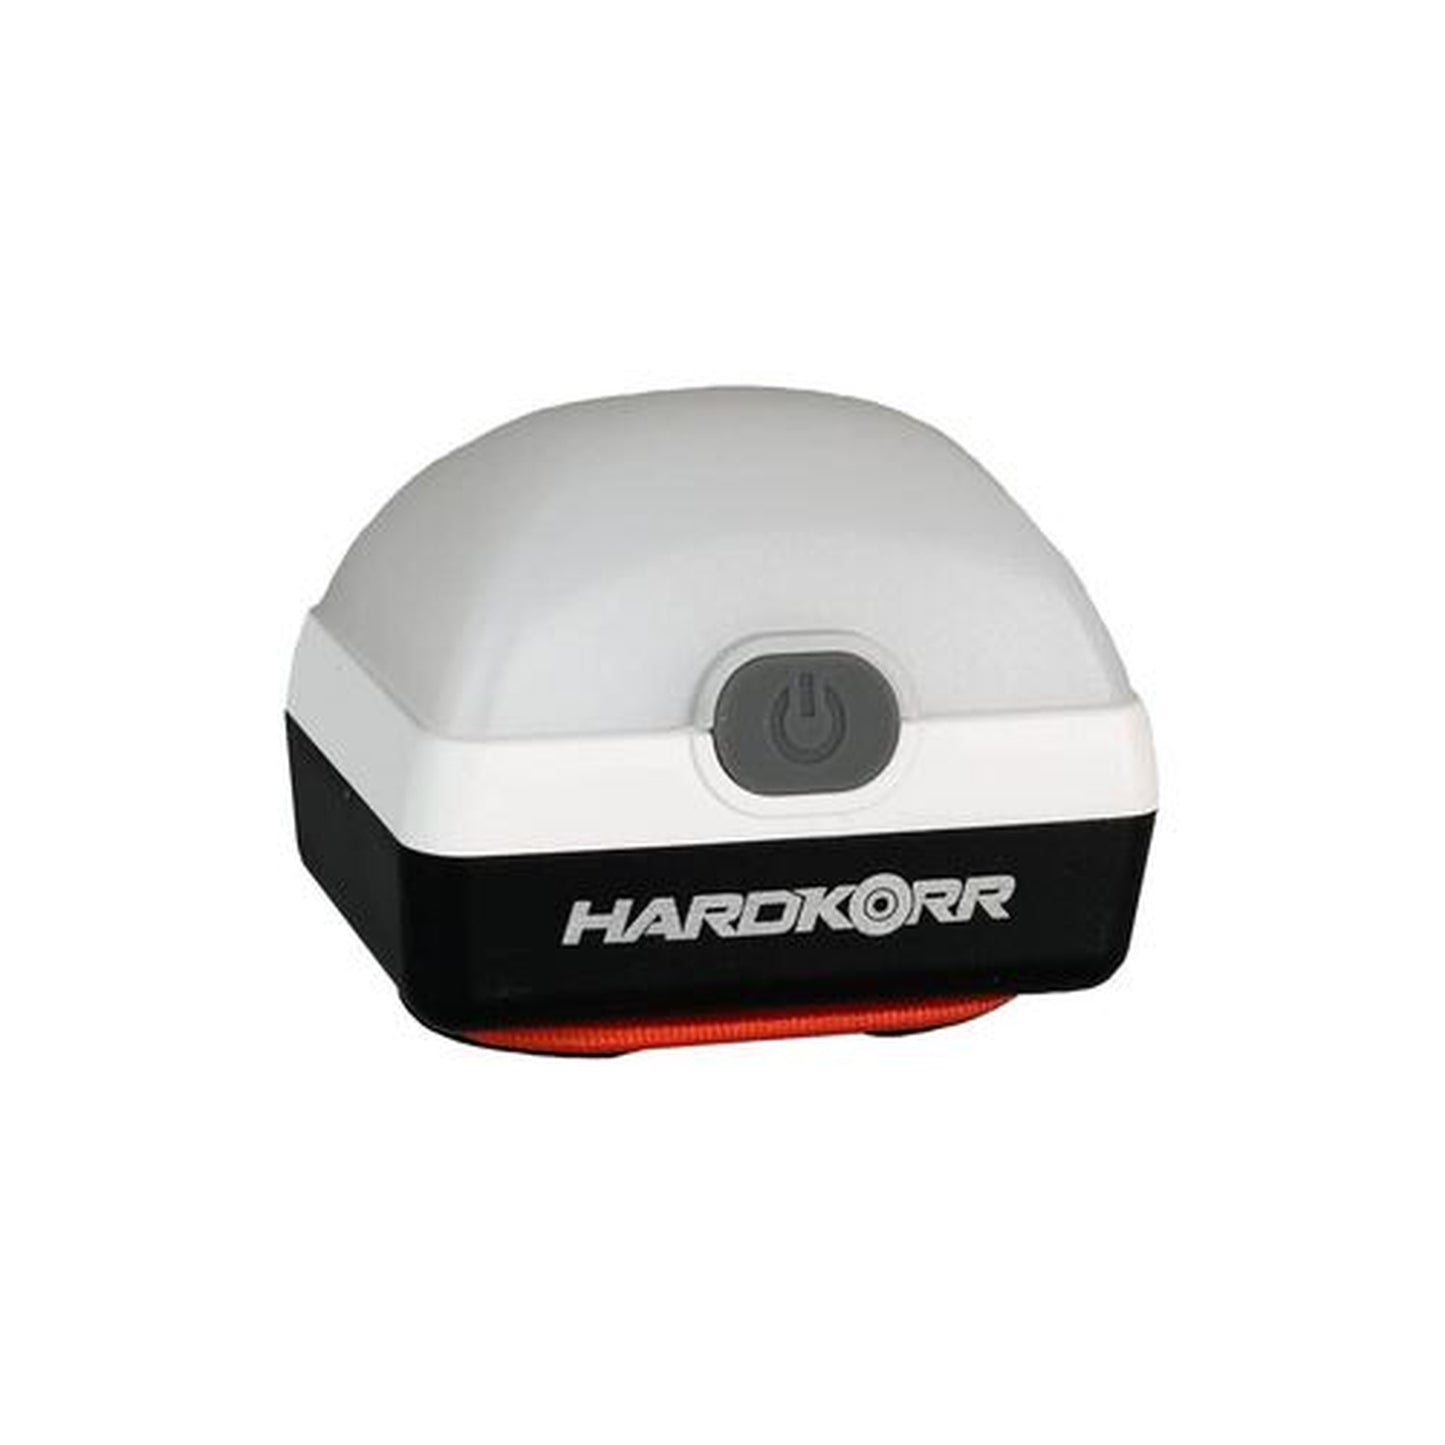 Hard Korr U-Lite™ Dual Colour LED Lantern with Inbuilt Lithium Battery